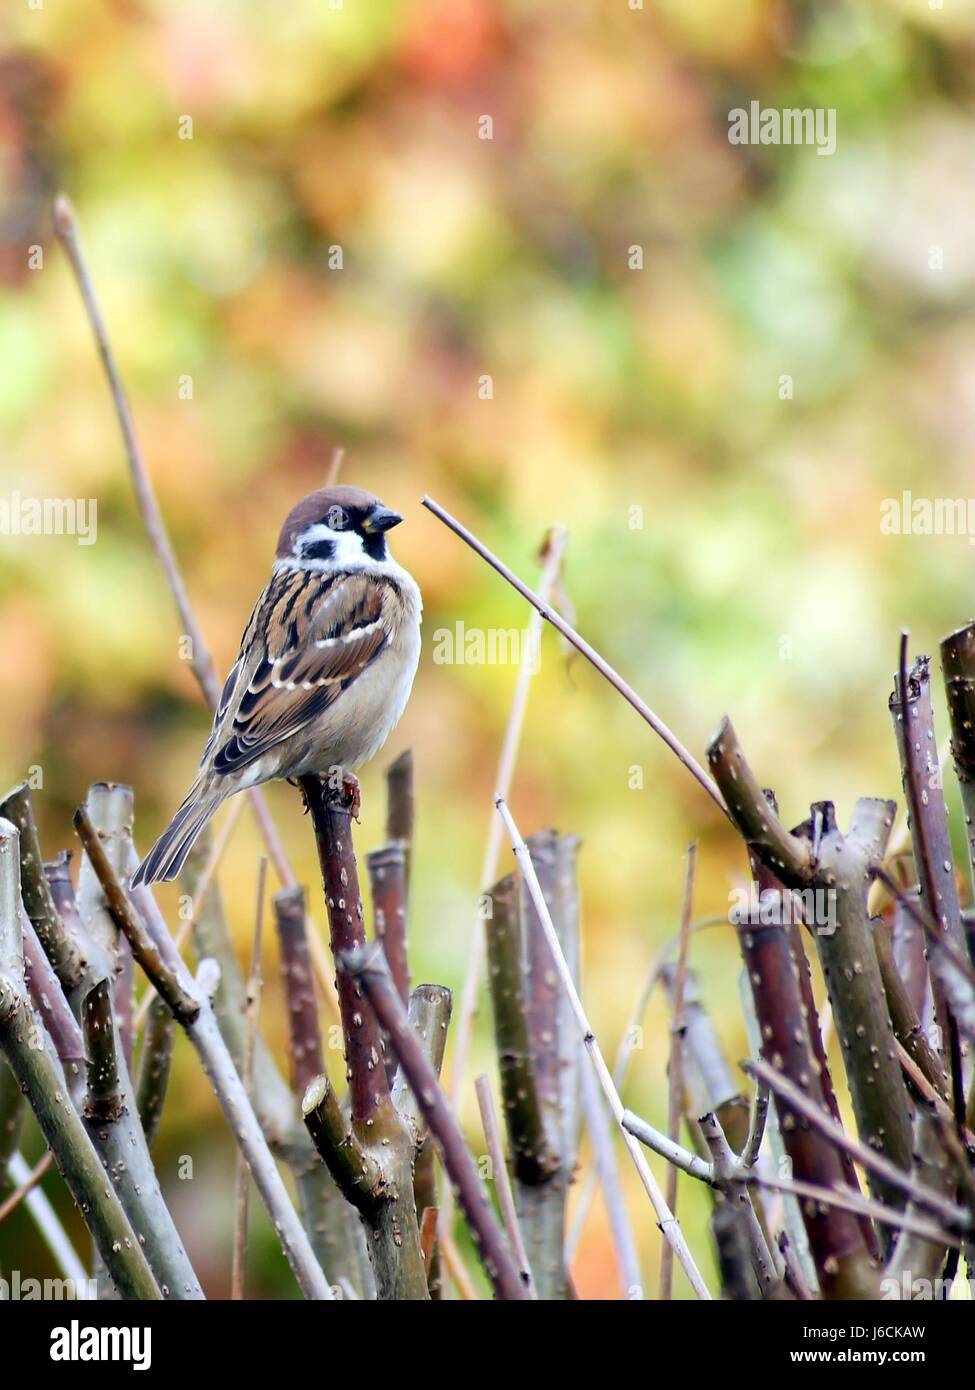 bird birds europe feathers beak sparrow beaks fly flies flys flying garden bird Stock Photo